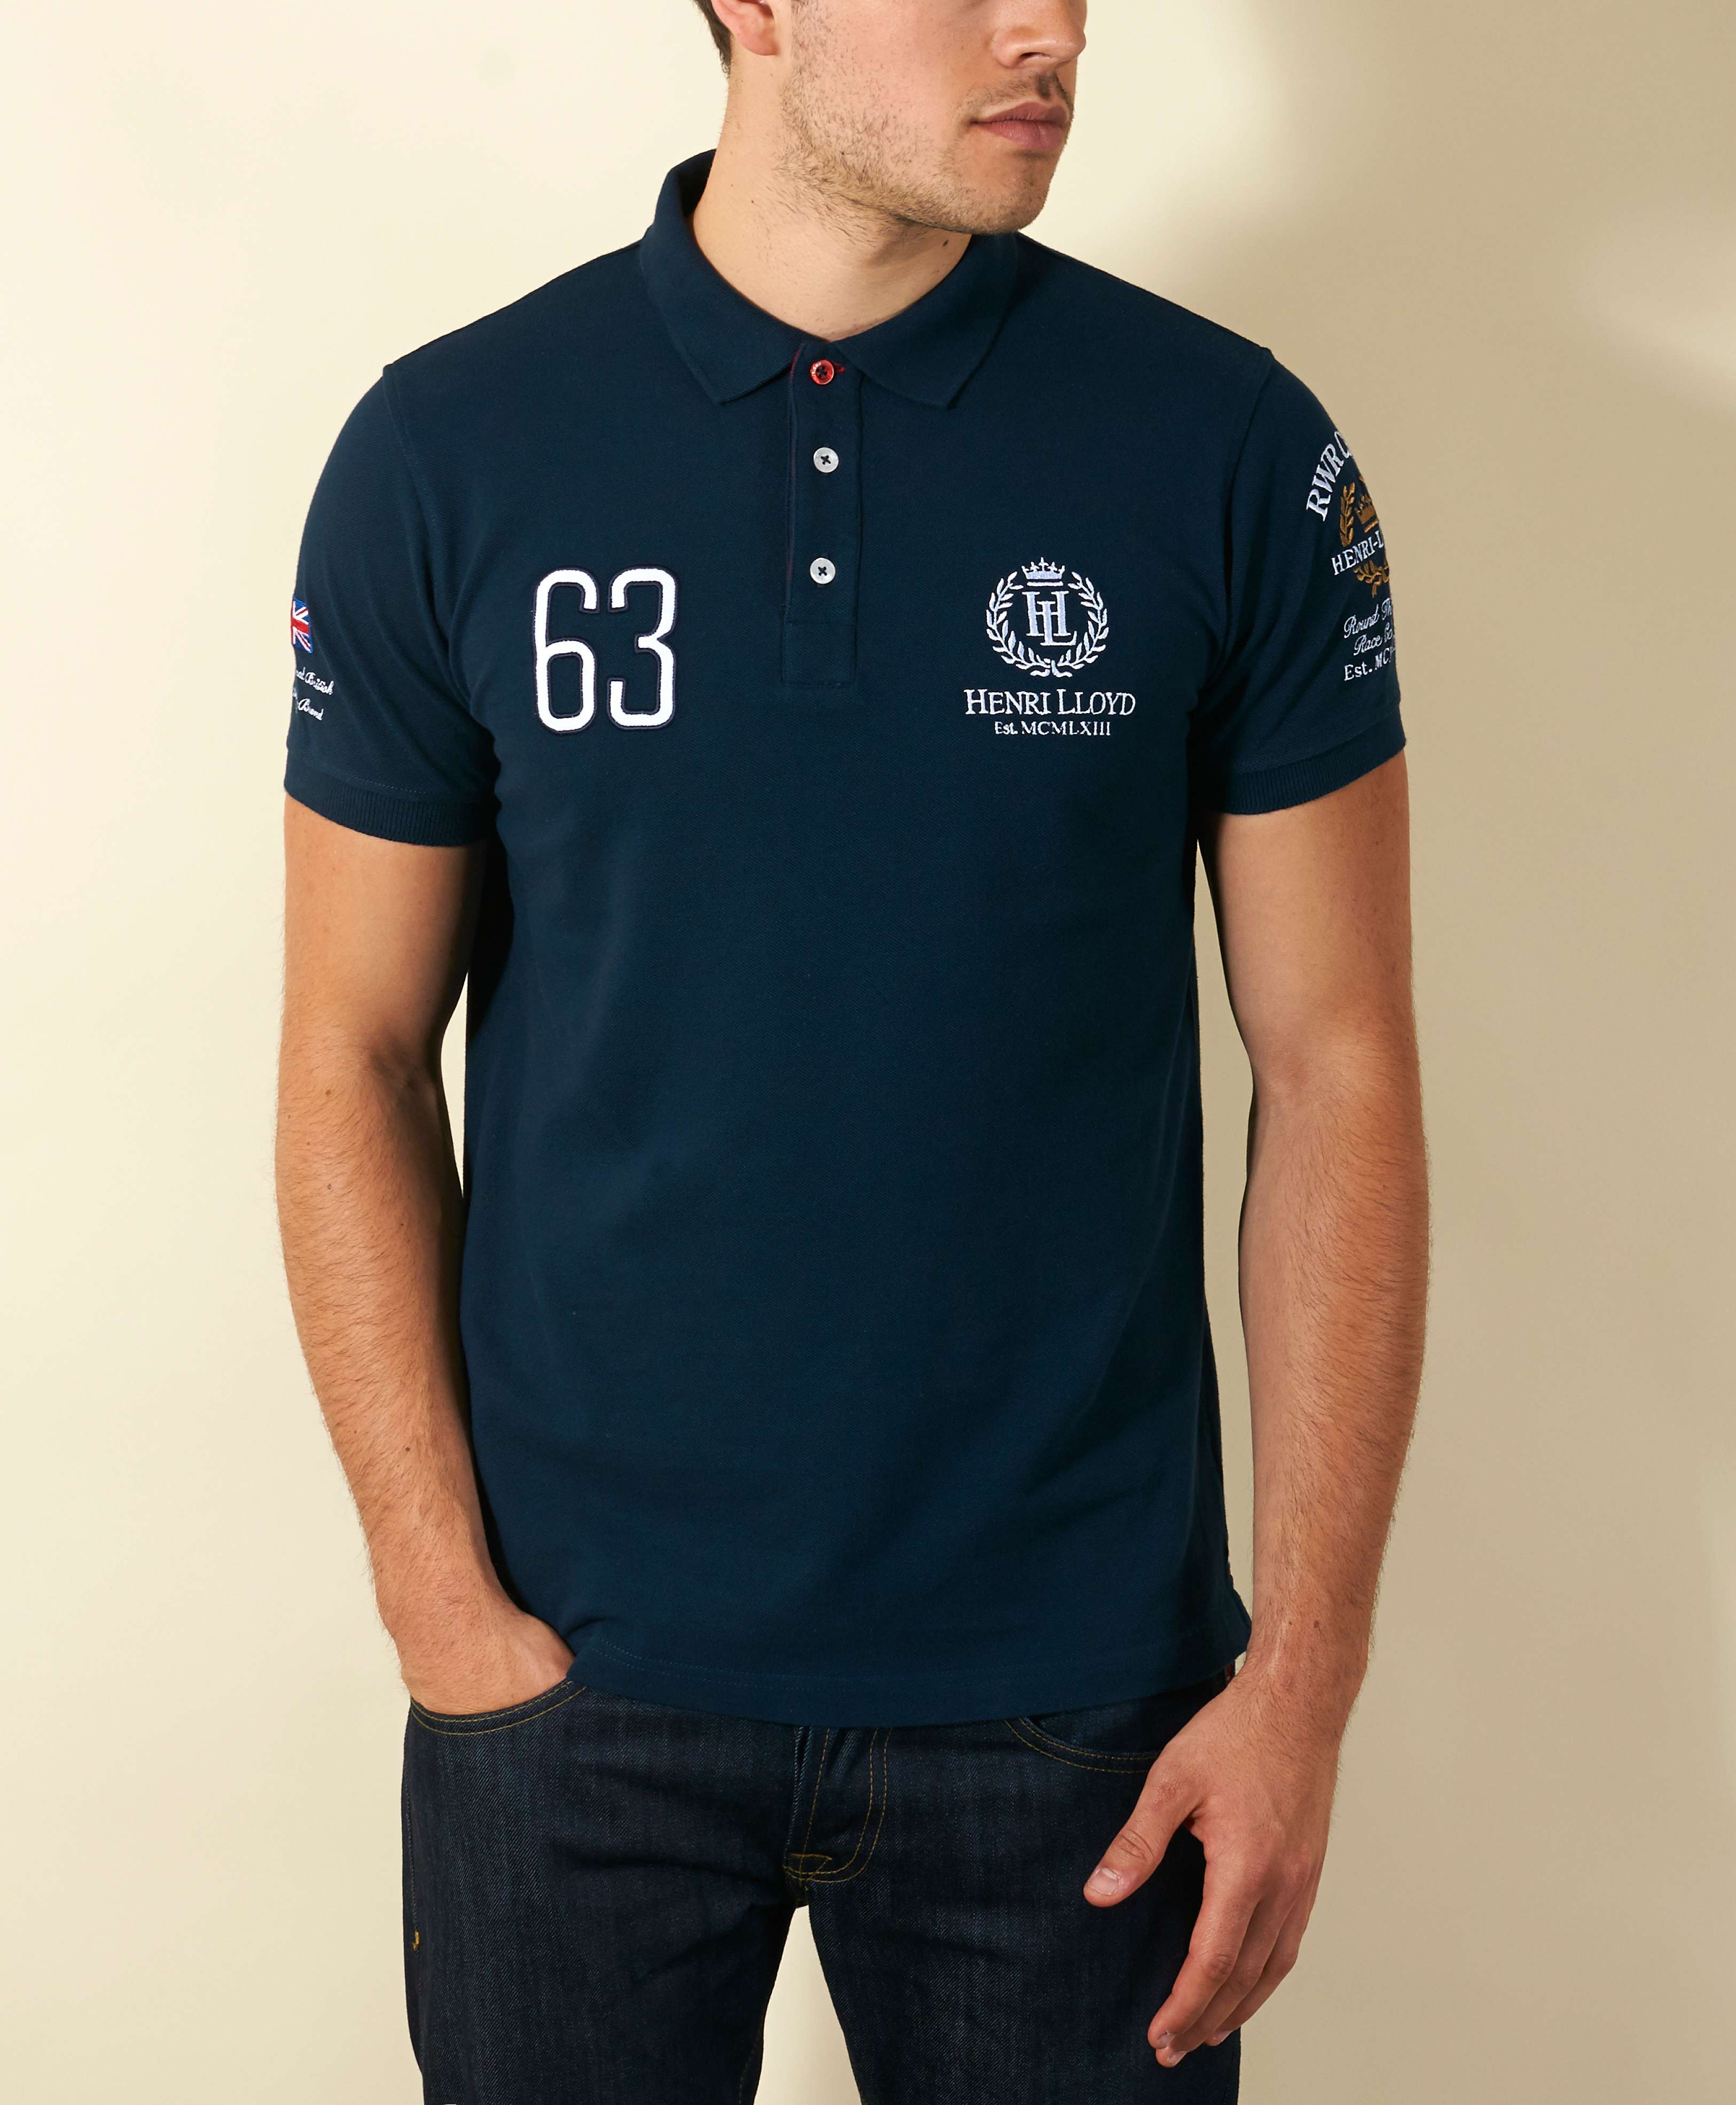 Henri Lloyd Round The World Race Maldon GB Polo Shirt | scotts Menswear